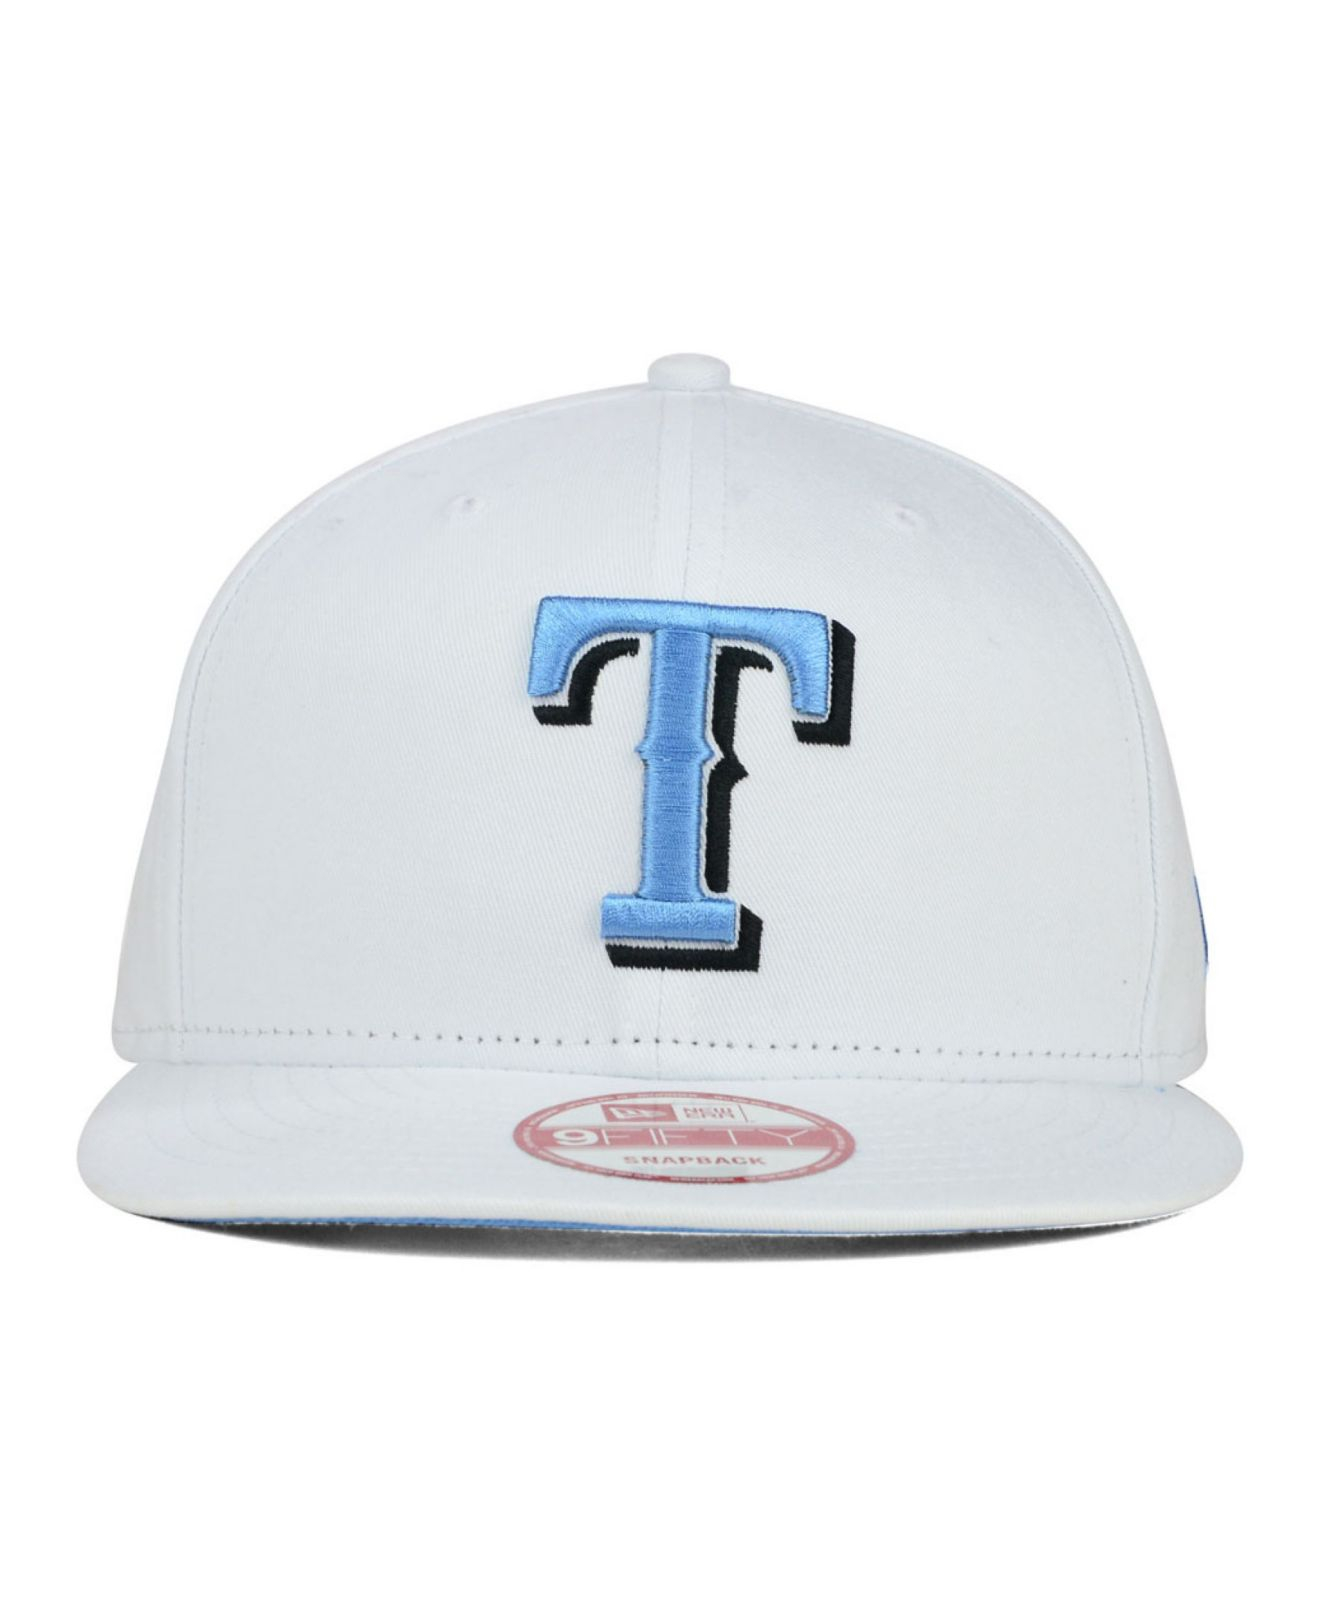 Texas Rangers New Era Vintage 9FIFTY Snapback Hat - White